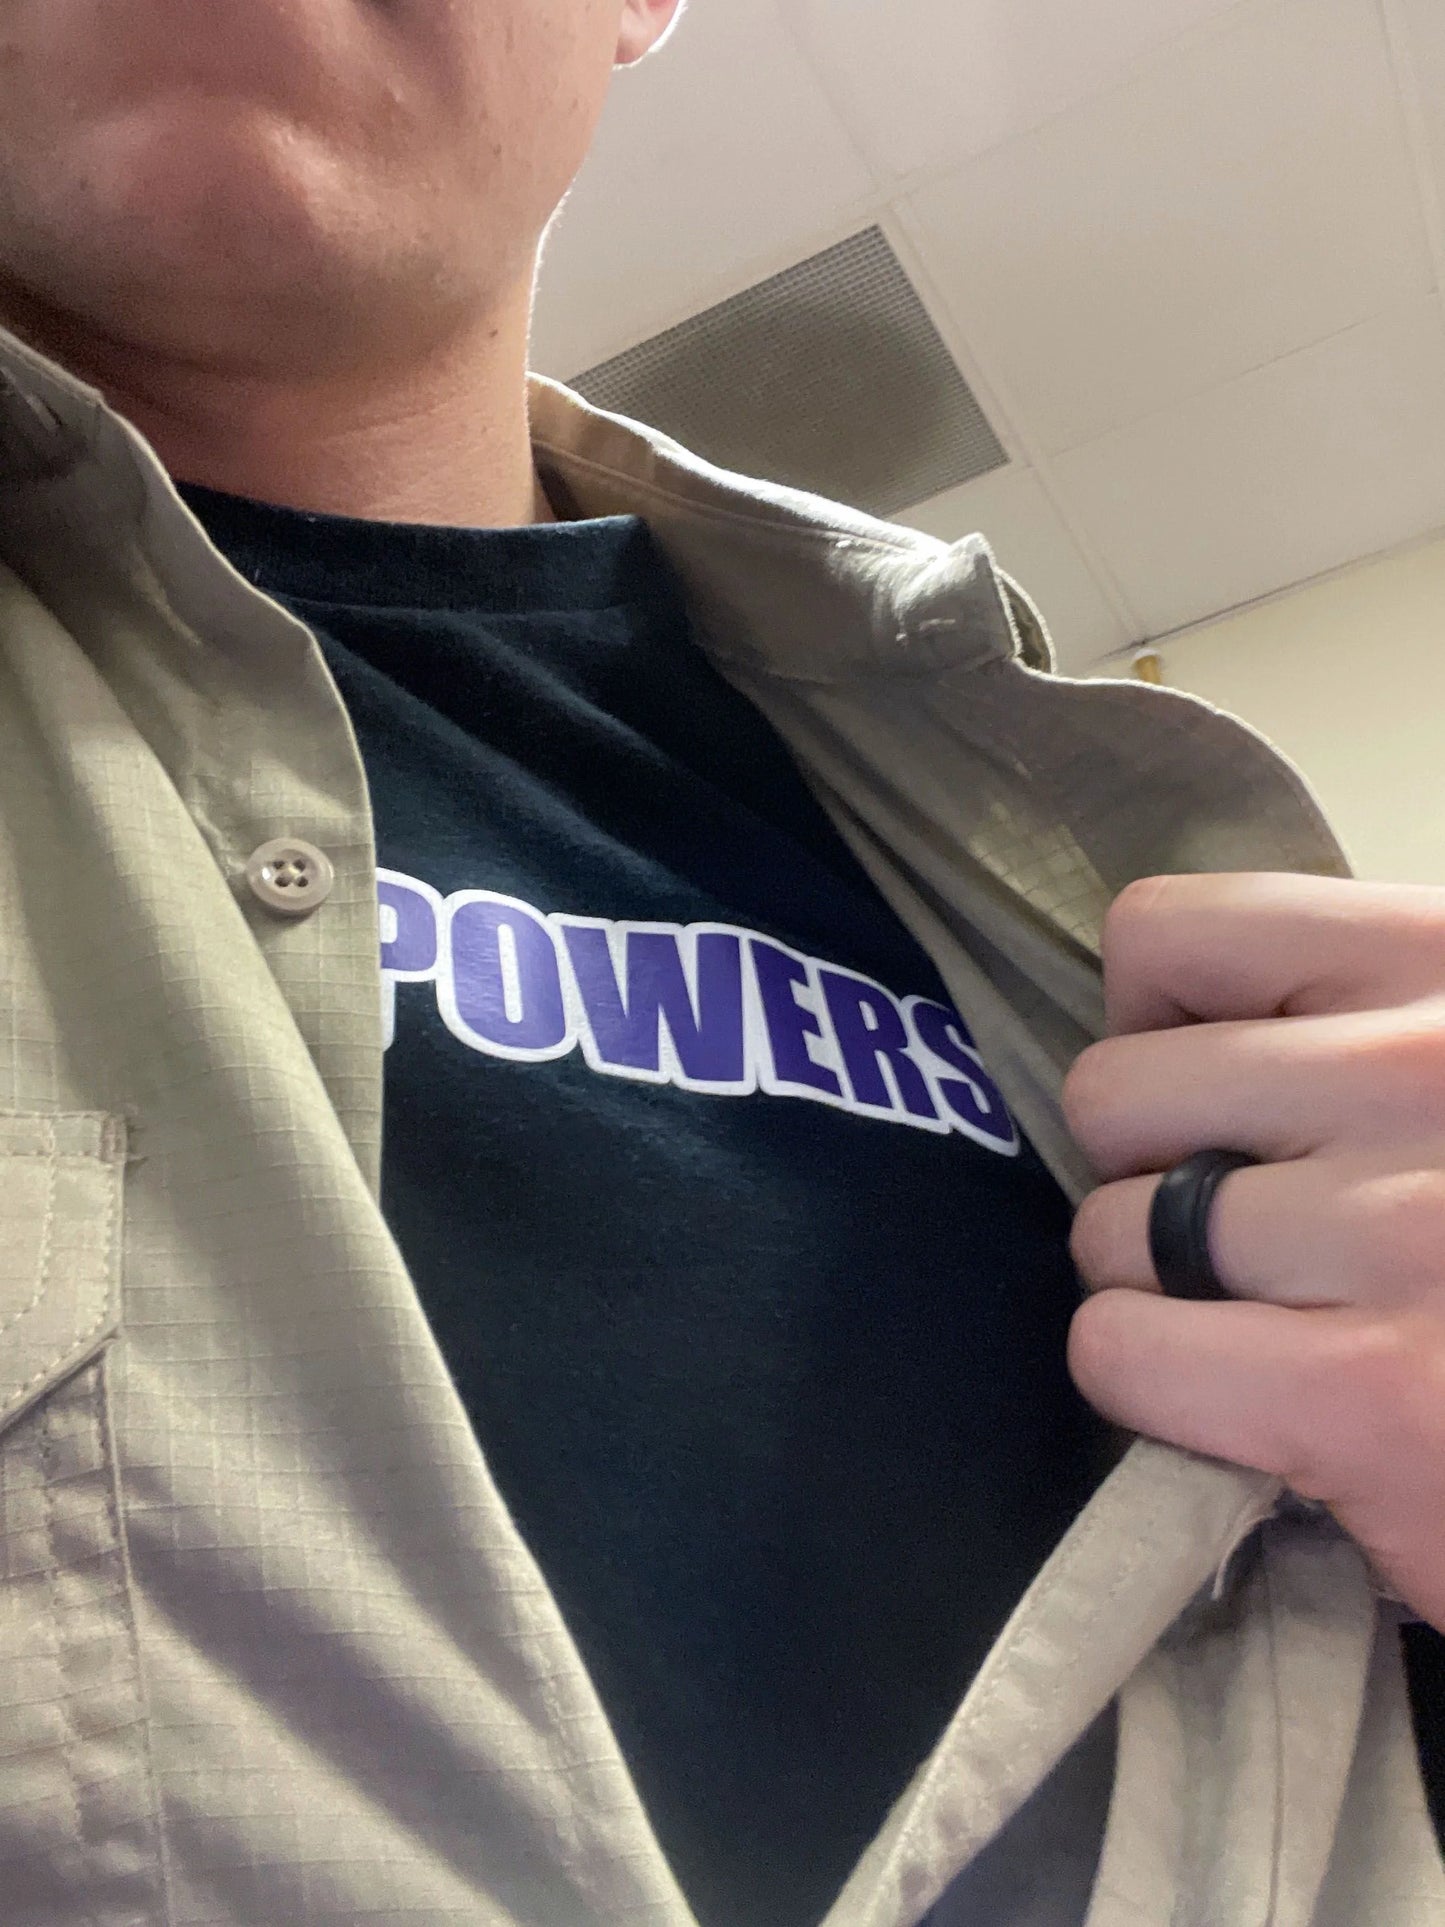 A Dwayne Powers T-Shirt